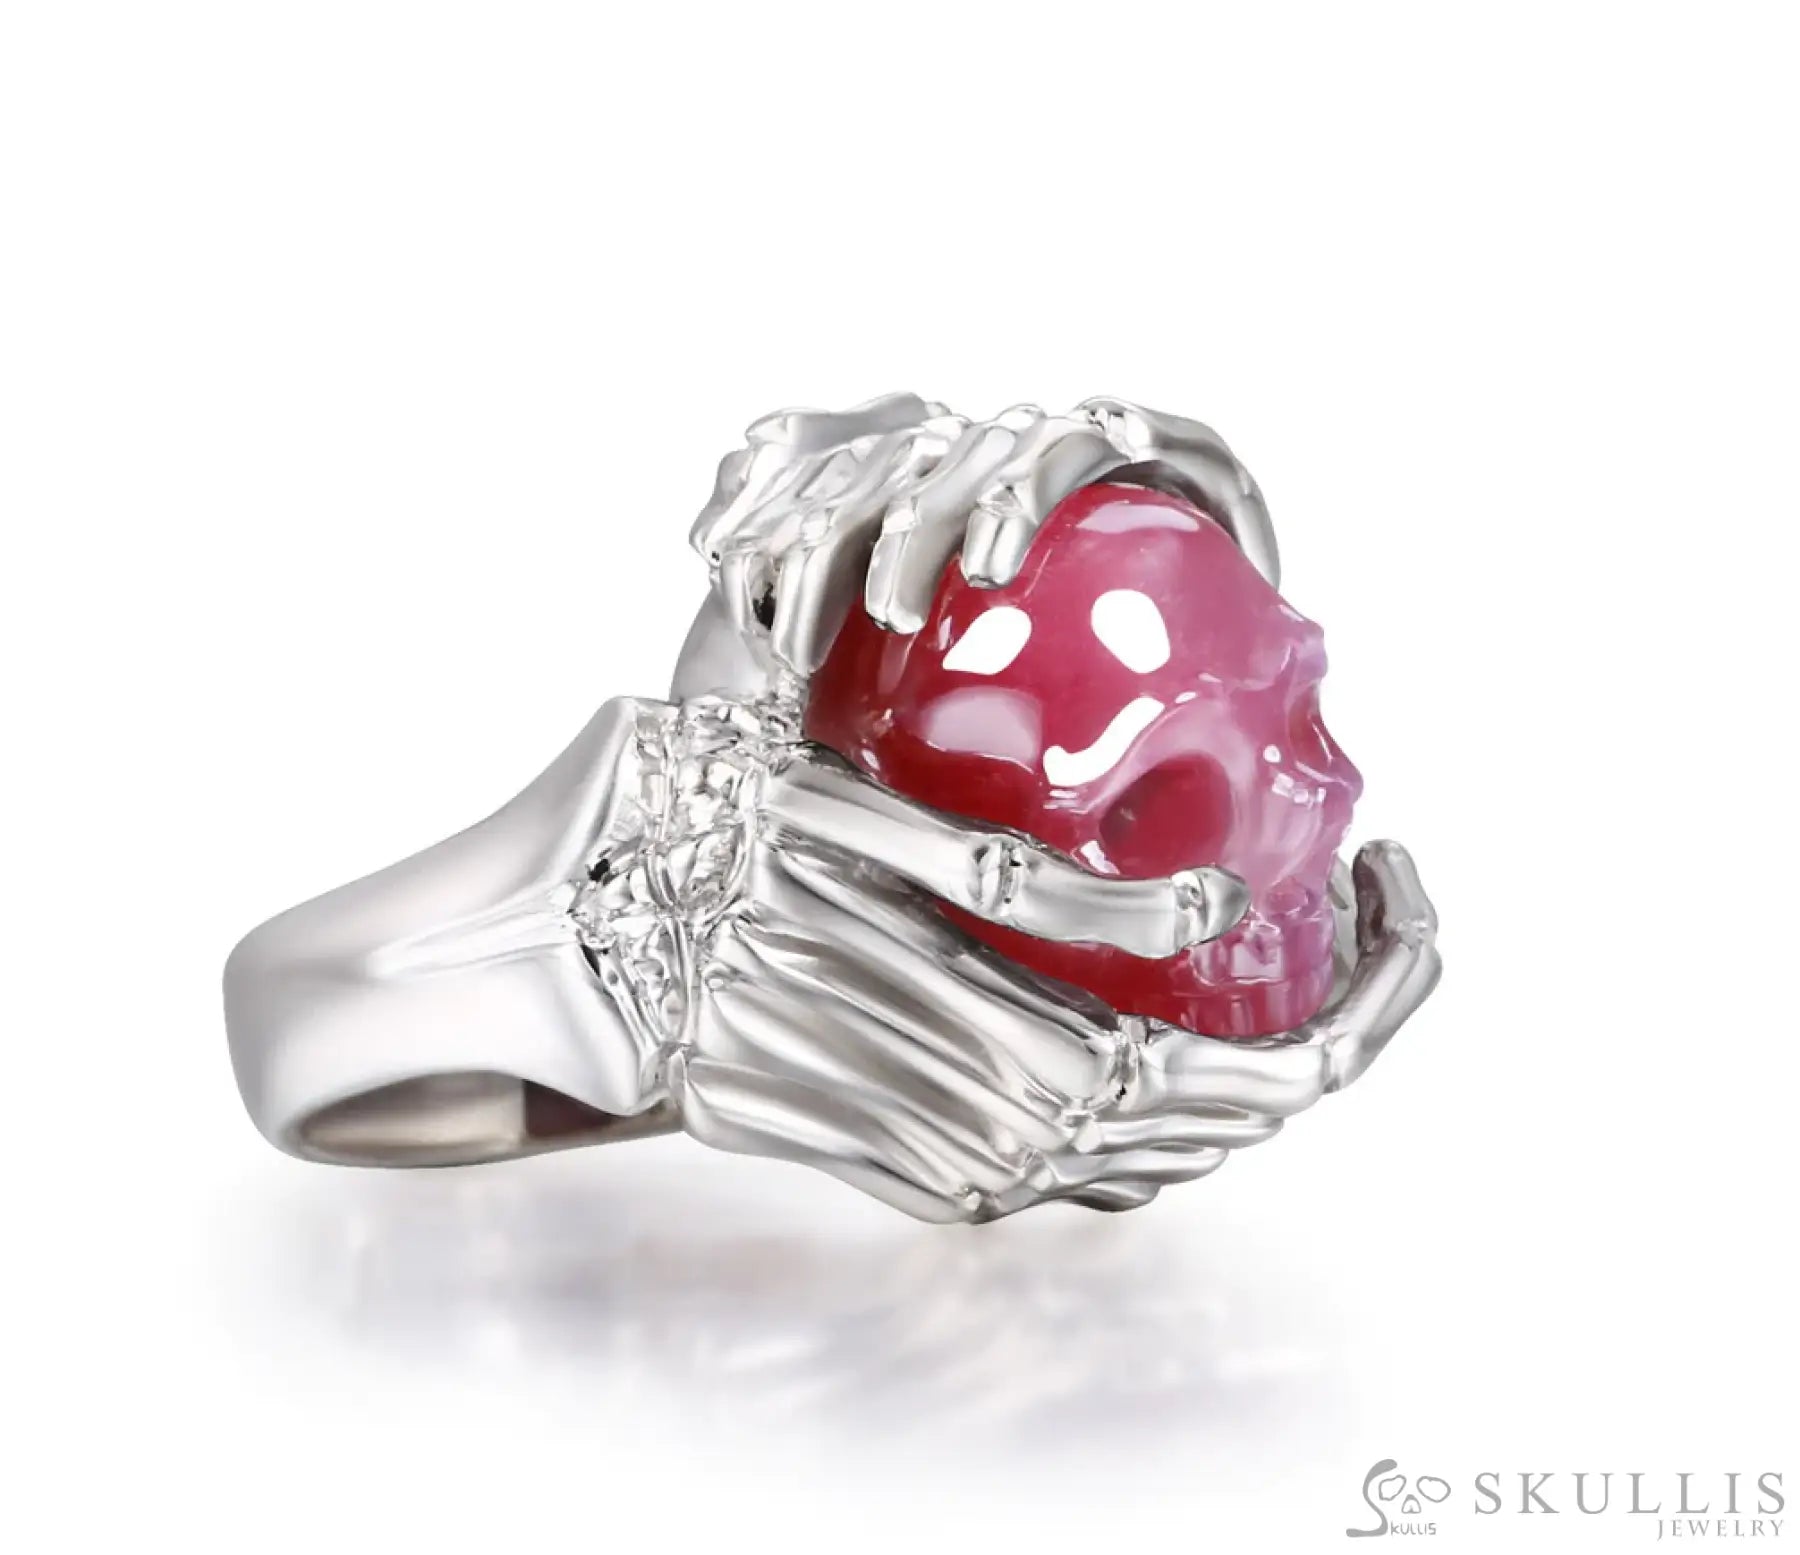 Gem Skull Ring Of Ruby Carved Skull With Skeletal Hands In 925 Sterling Silver Skull Rings